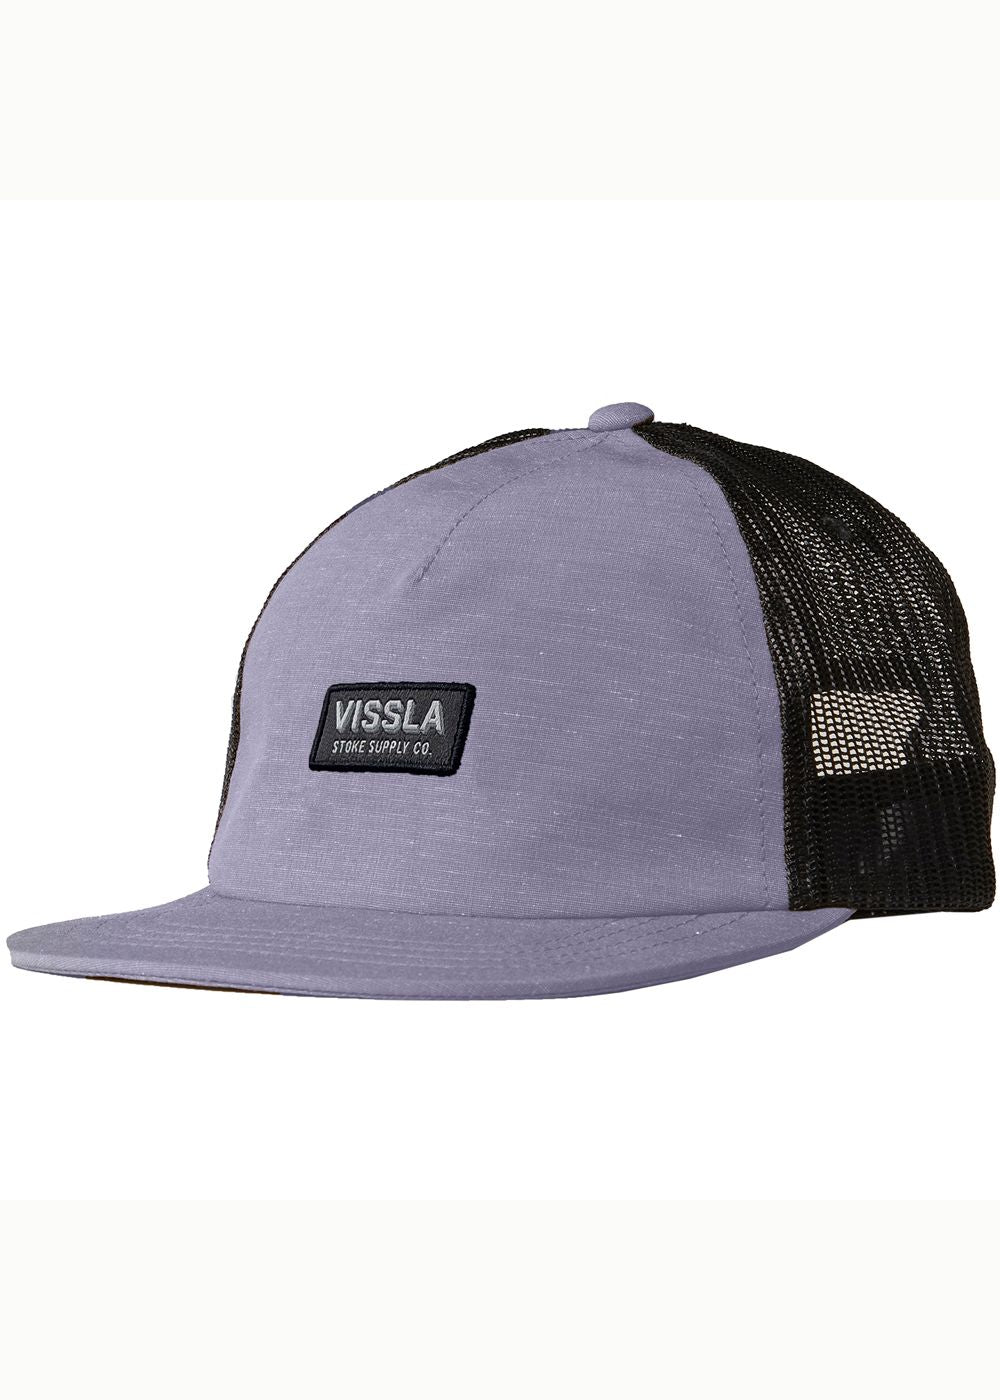 Vissla Lay Day Eco Trucker II Hat-dusty lilac